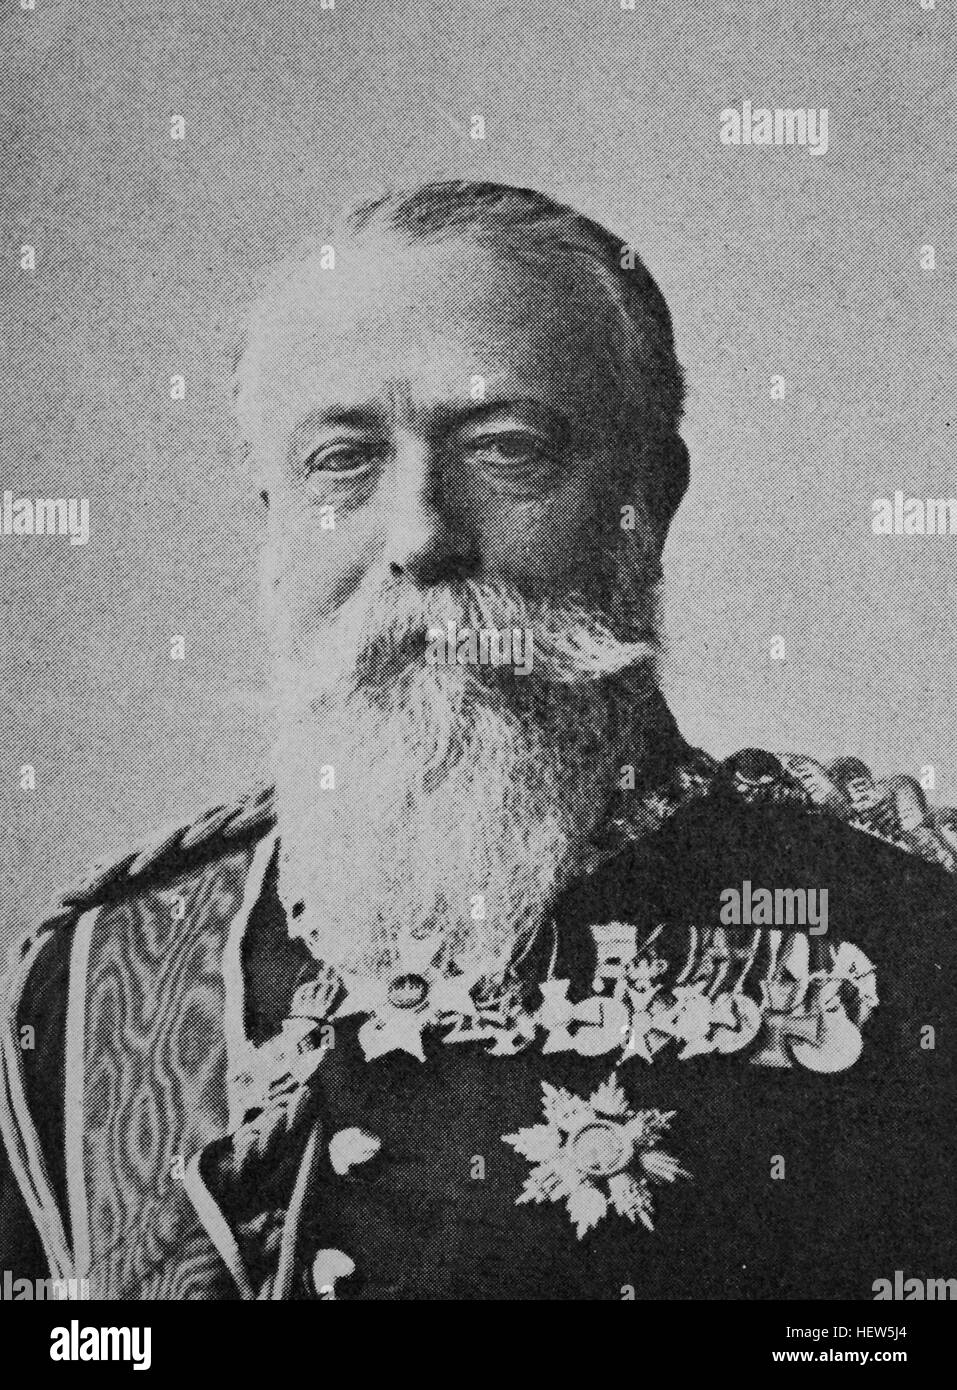 Frederick I, Frederick Wilhelm Ludwig, 9 September 1826 - 28 September 1907, Grand Duke of Baden from 1856 to 1907., picture from 1895, digital improved Stock Photo